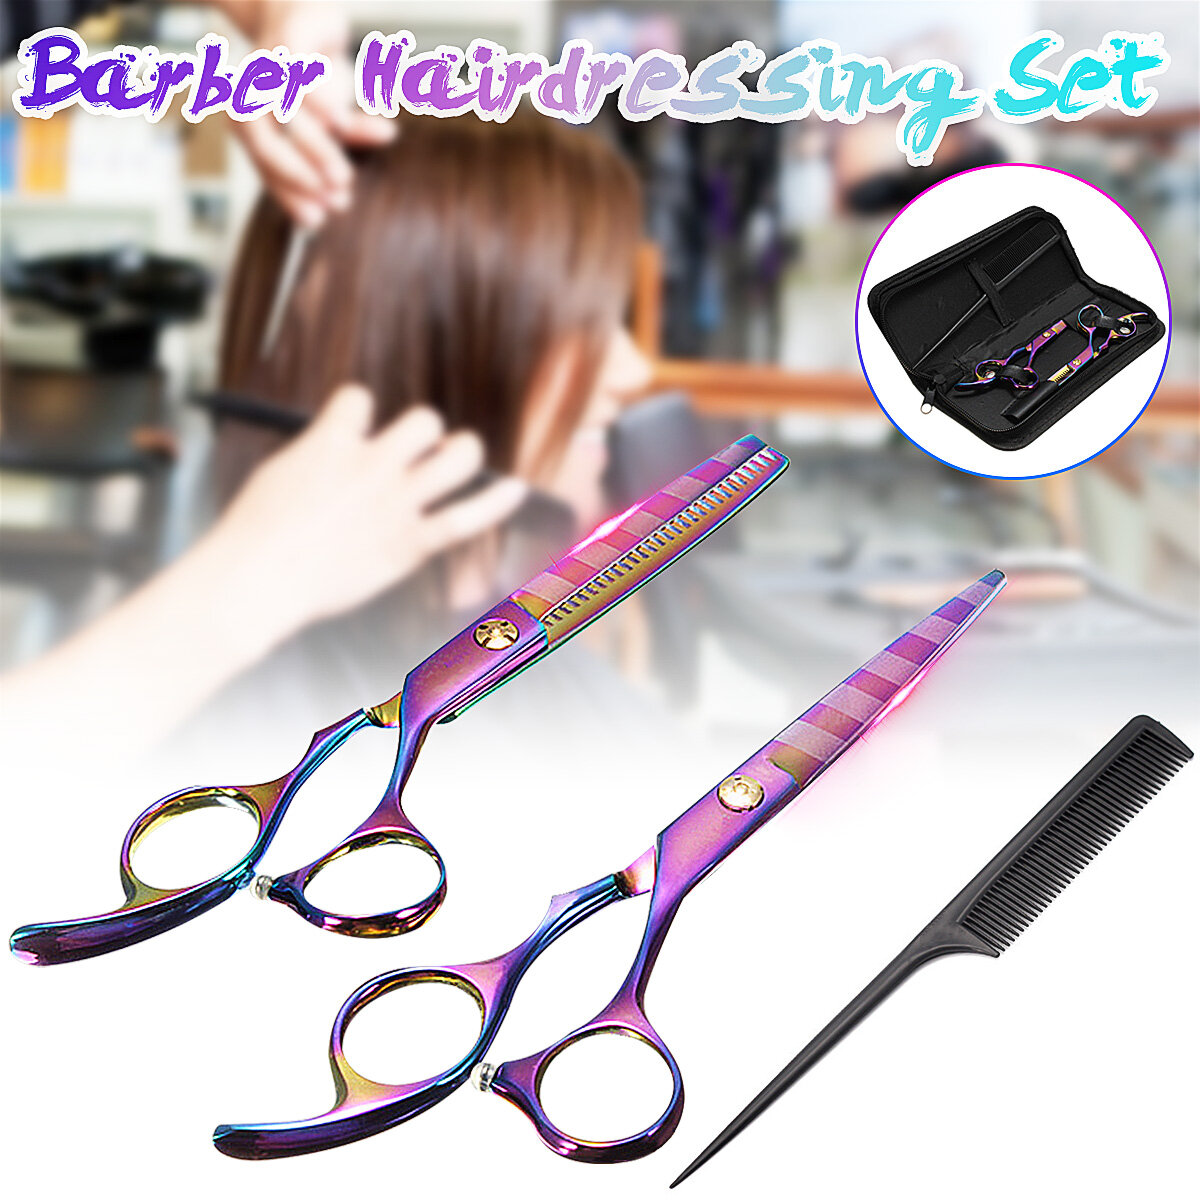 

Professional Scissors Comb Set Barber Hair Cutting Thinning Scissors Shears Hairdressing Set